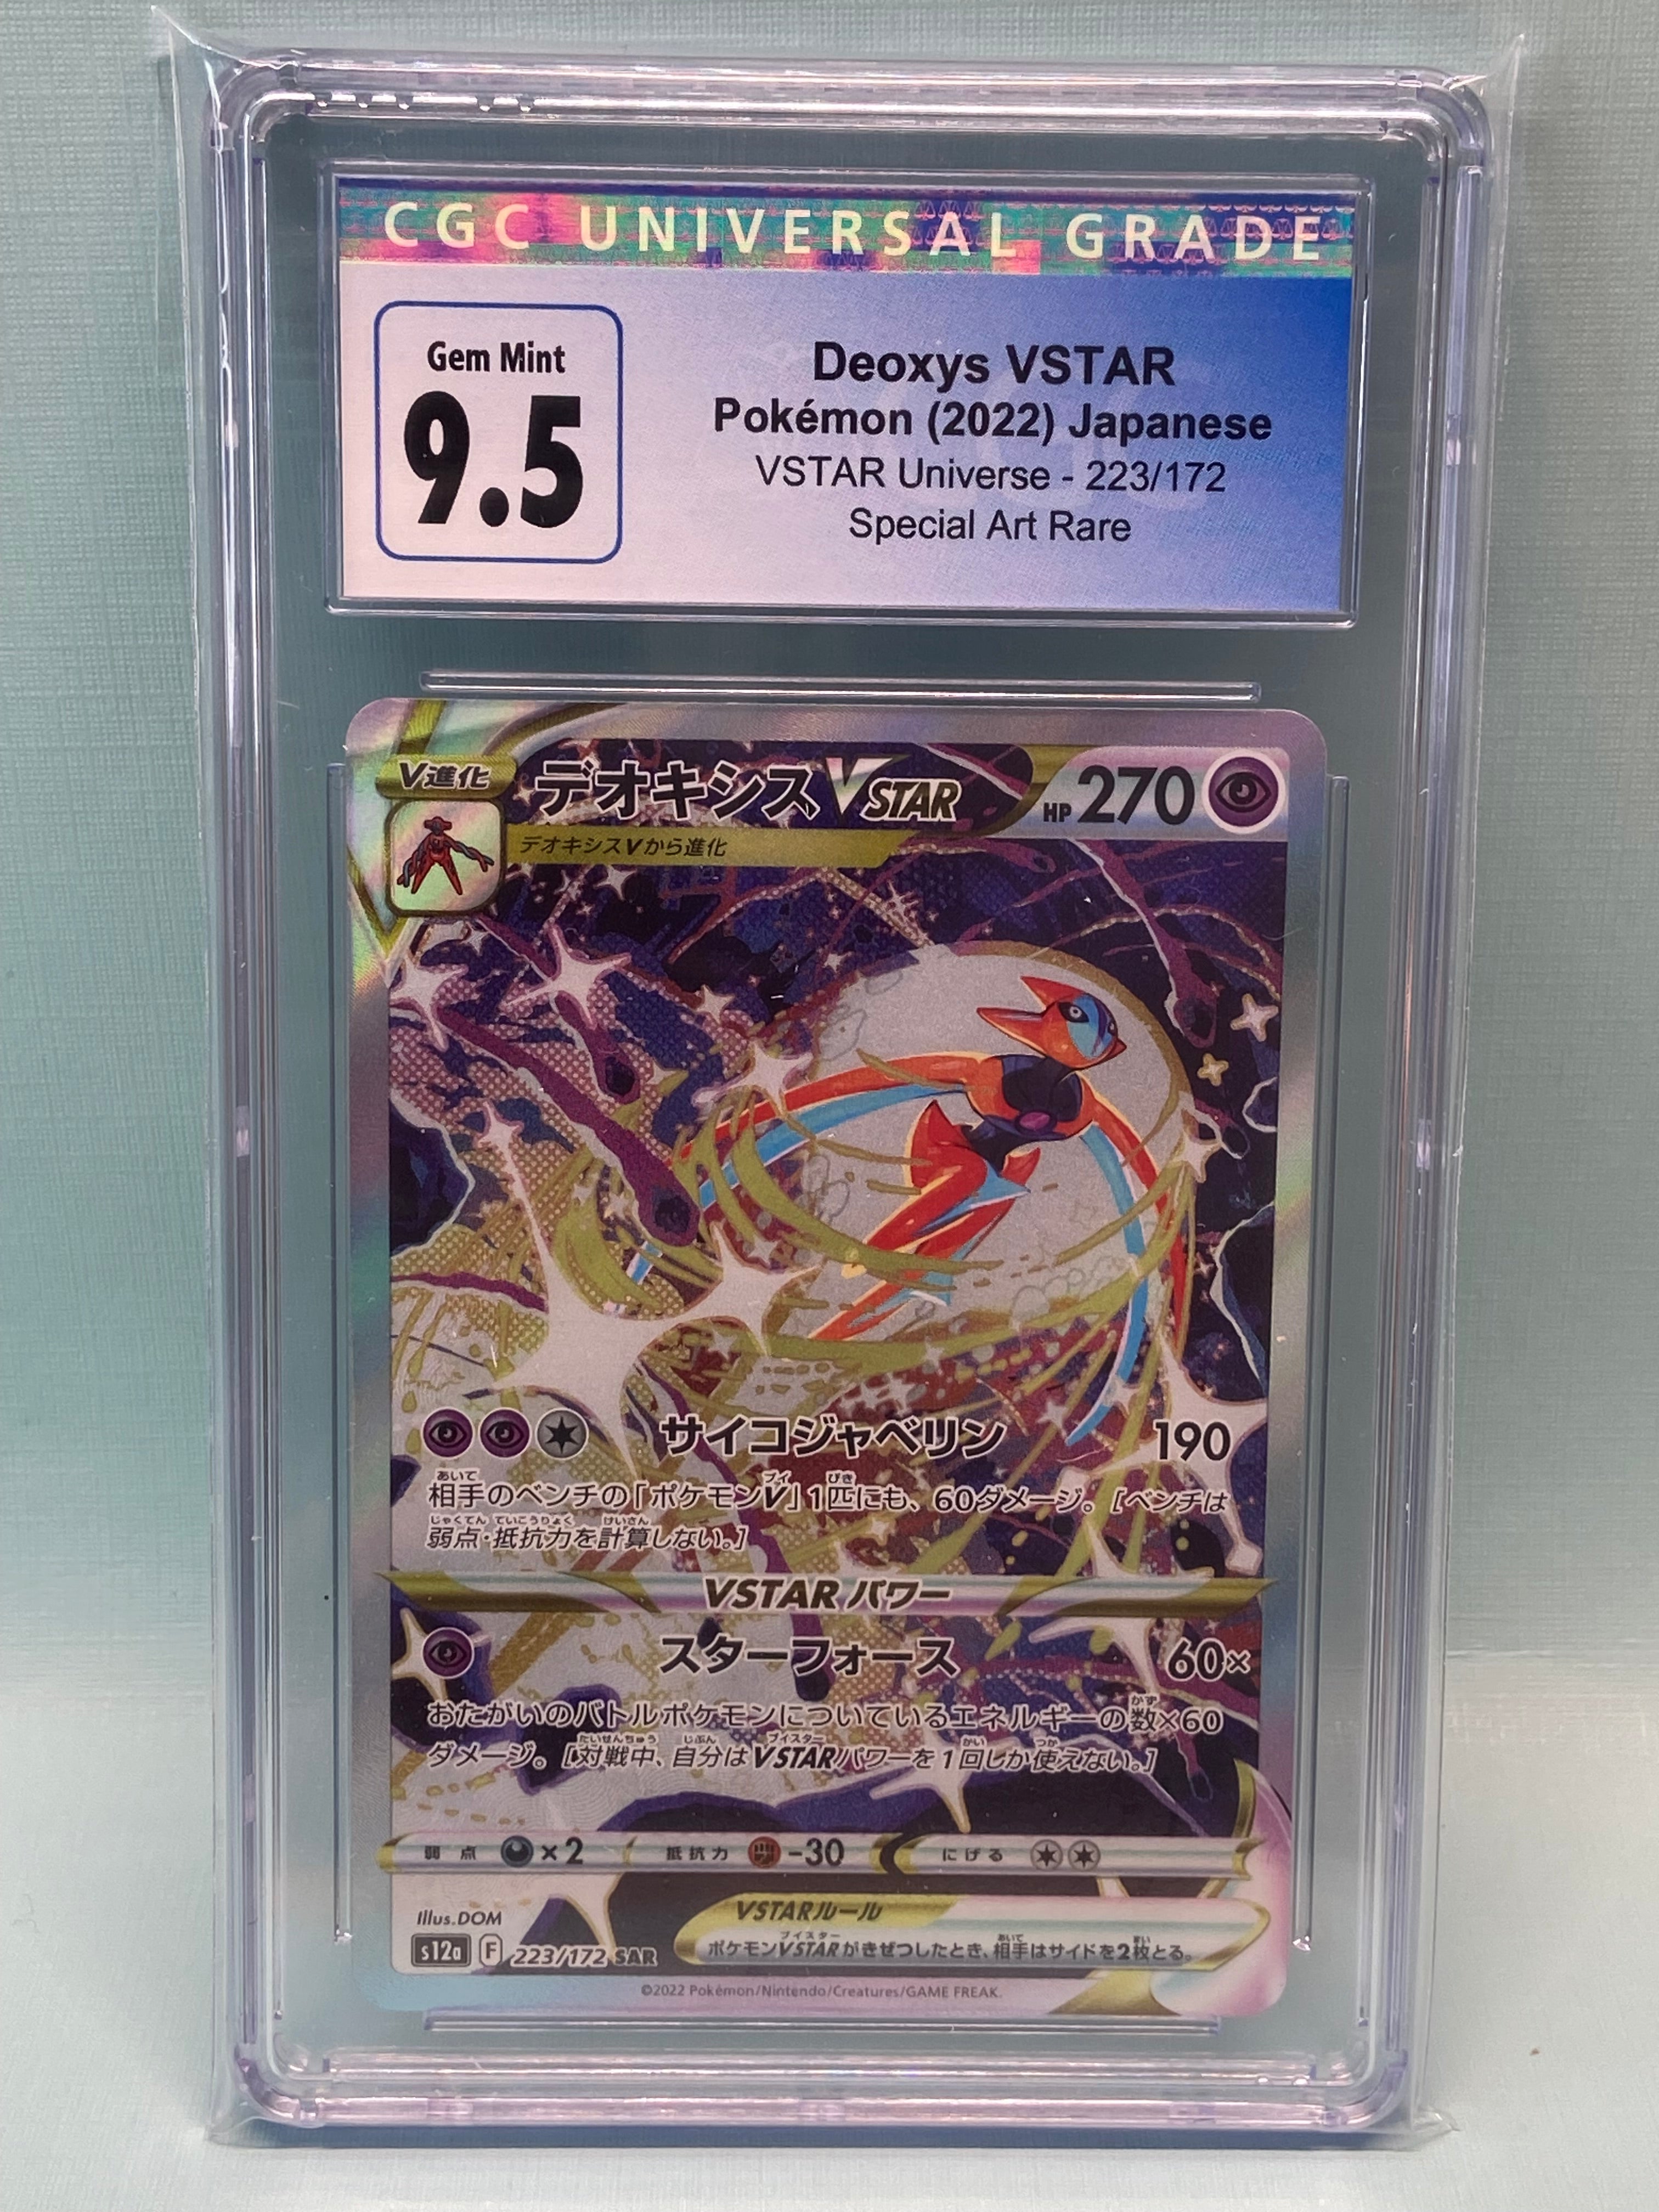 Deoxys VSTAR - 223/172 - CGC 9.5 - Special Art Rare - VSTAR